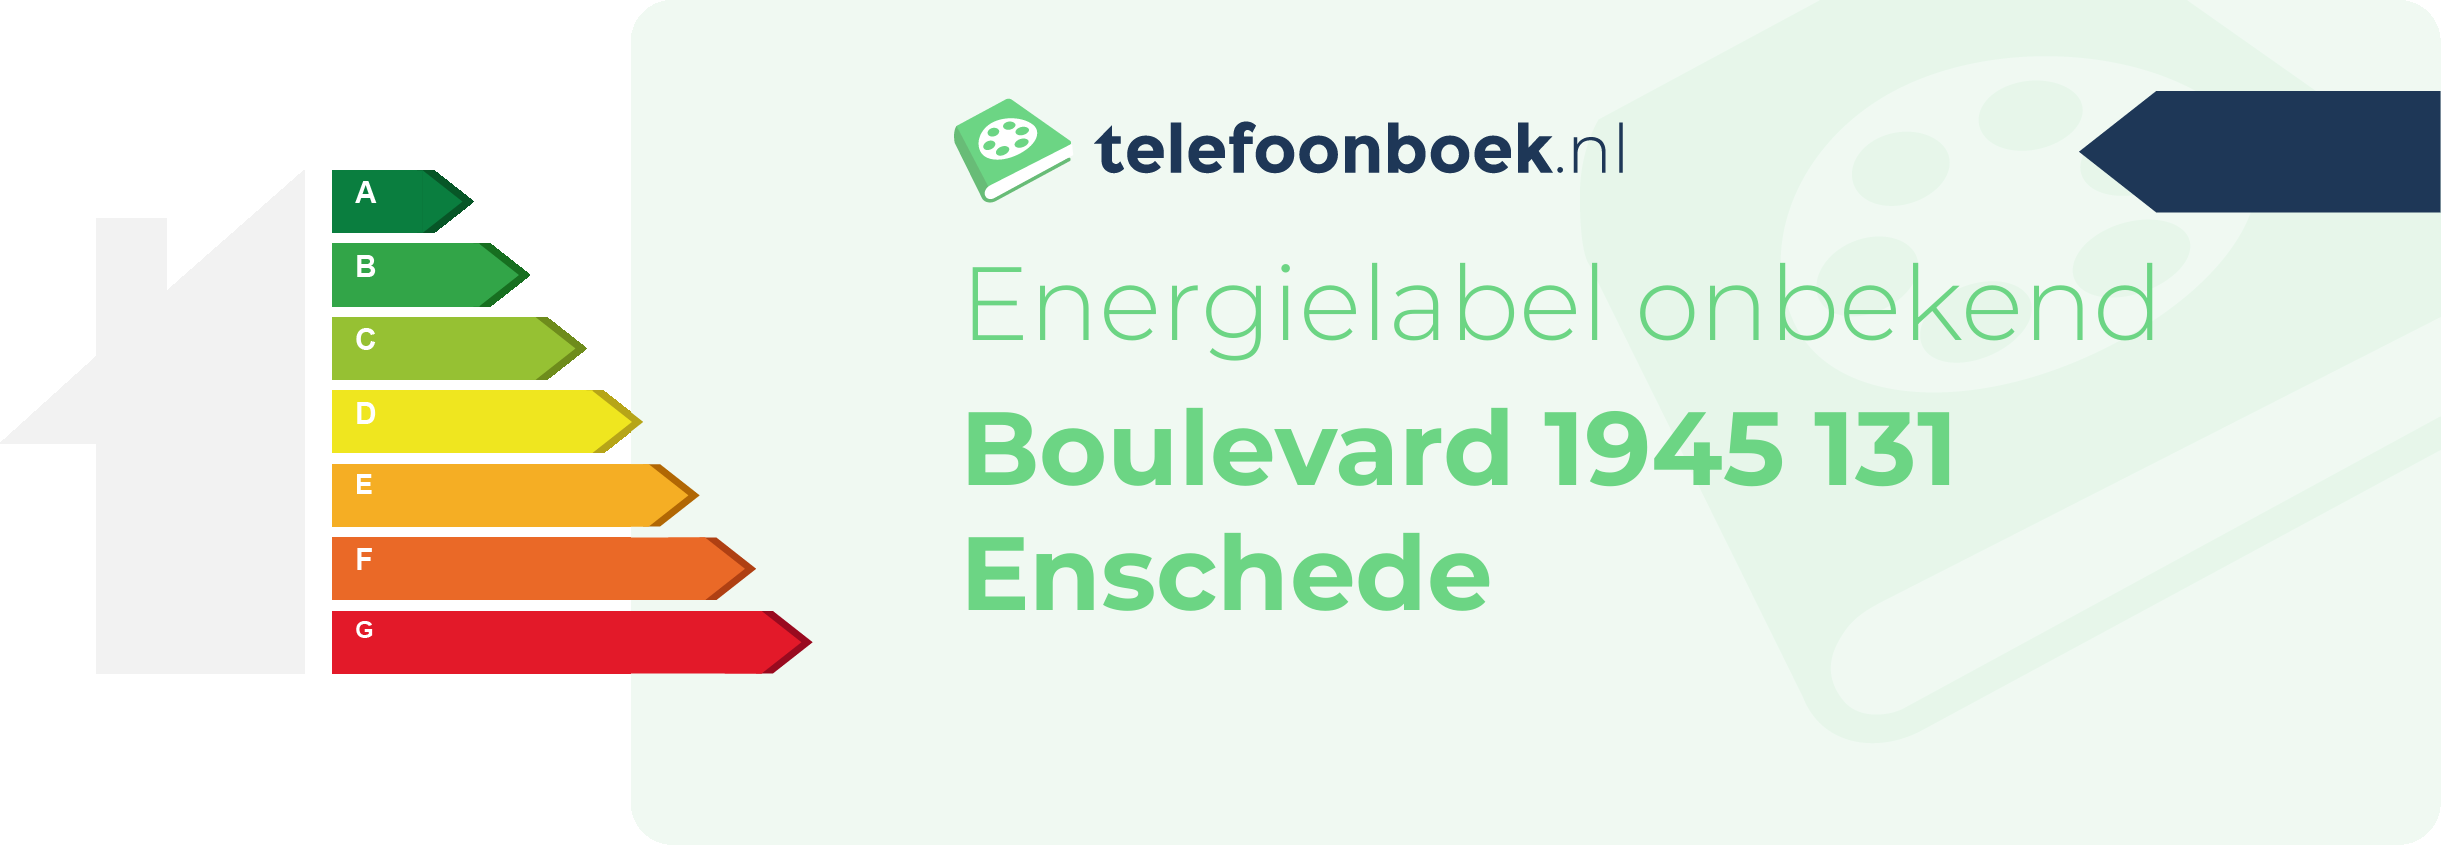 Energielabel Boulevard 1945 131 Enschede